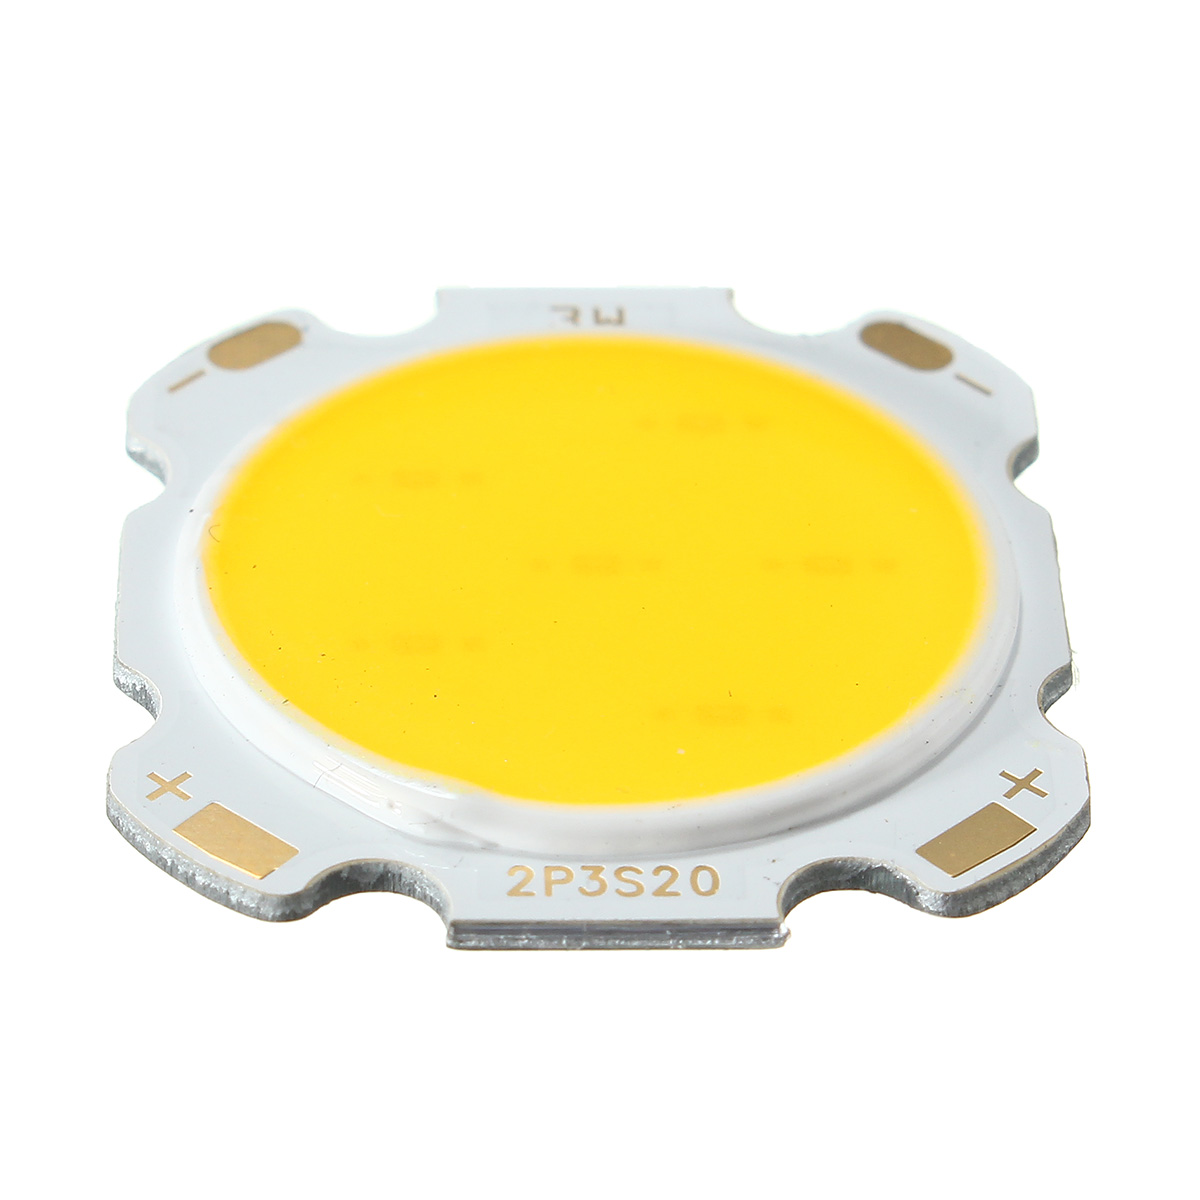 3W-DIY-LED-COB-Chip-High-Power-Bead-Light-Lamp-Bulb-WhiteWarm-White-DC9-12V-1097238